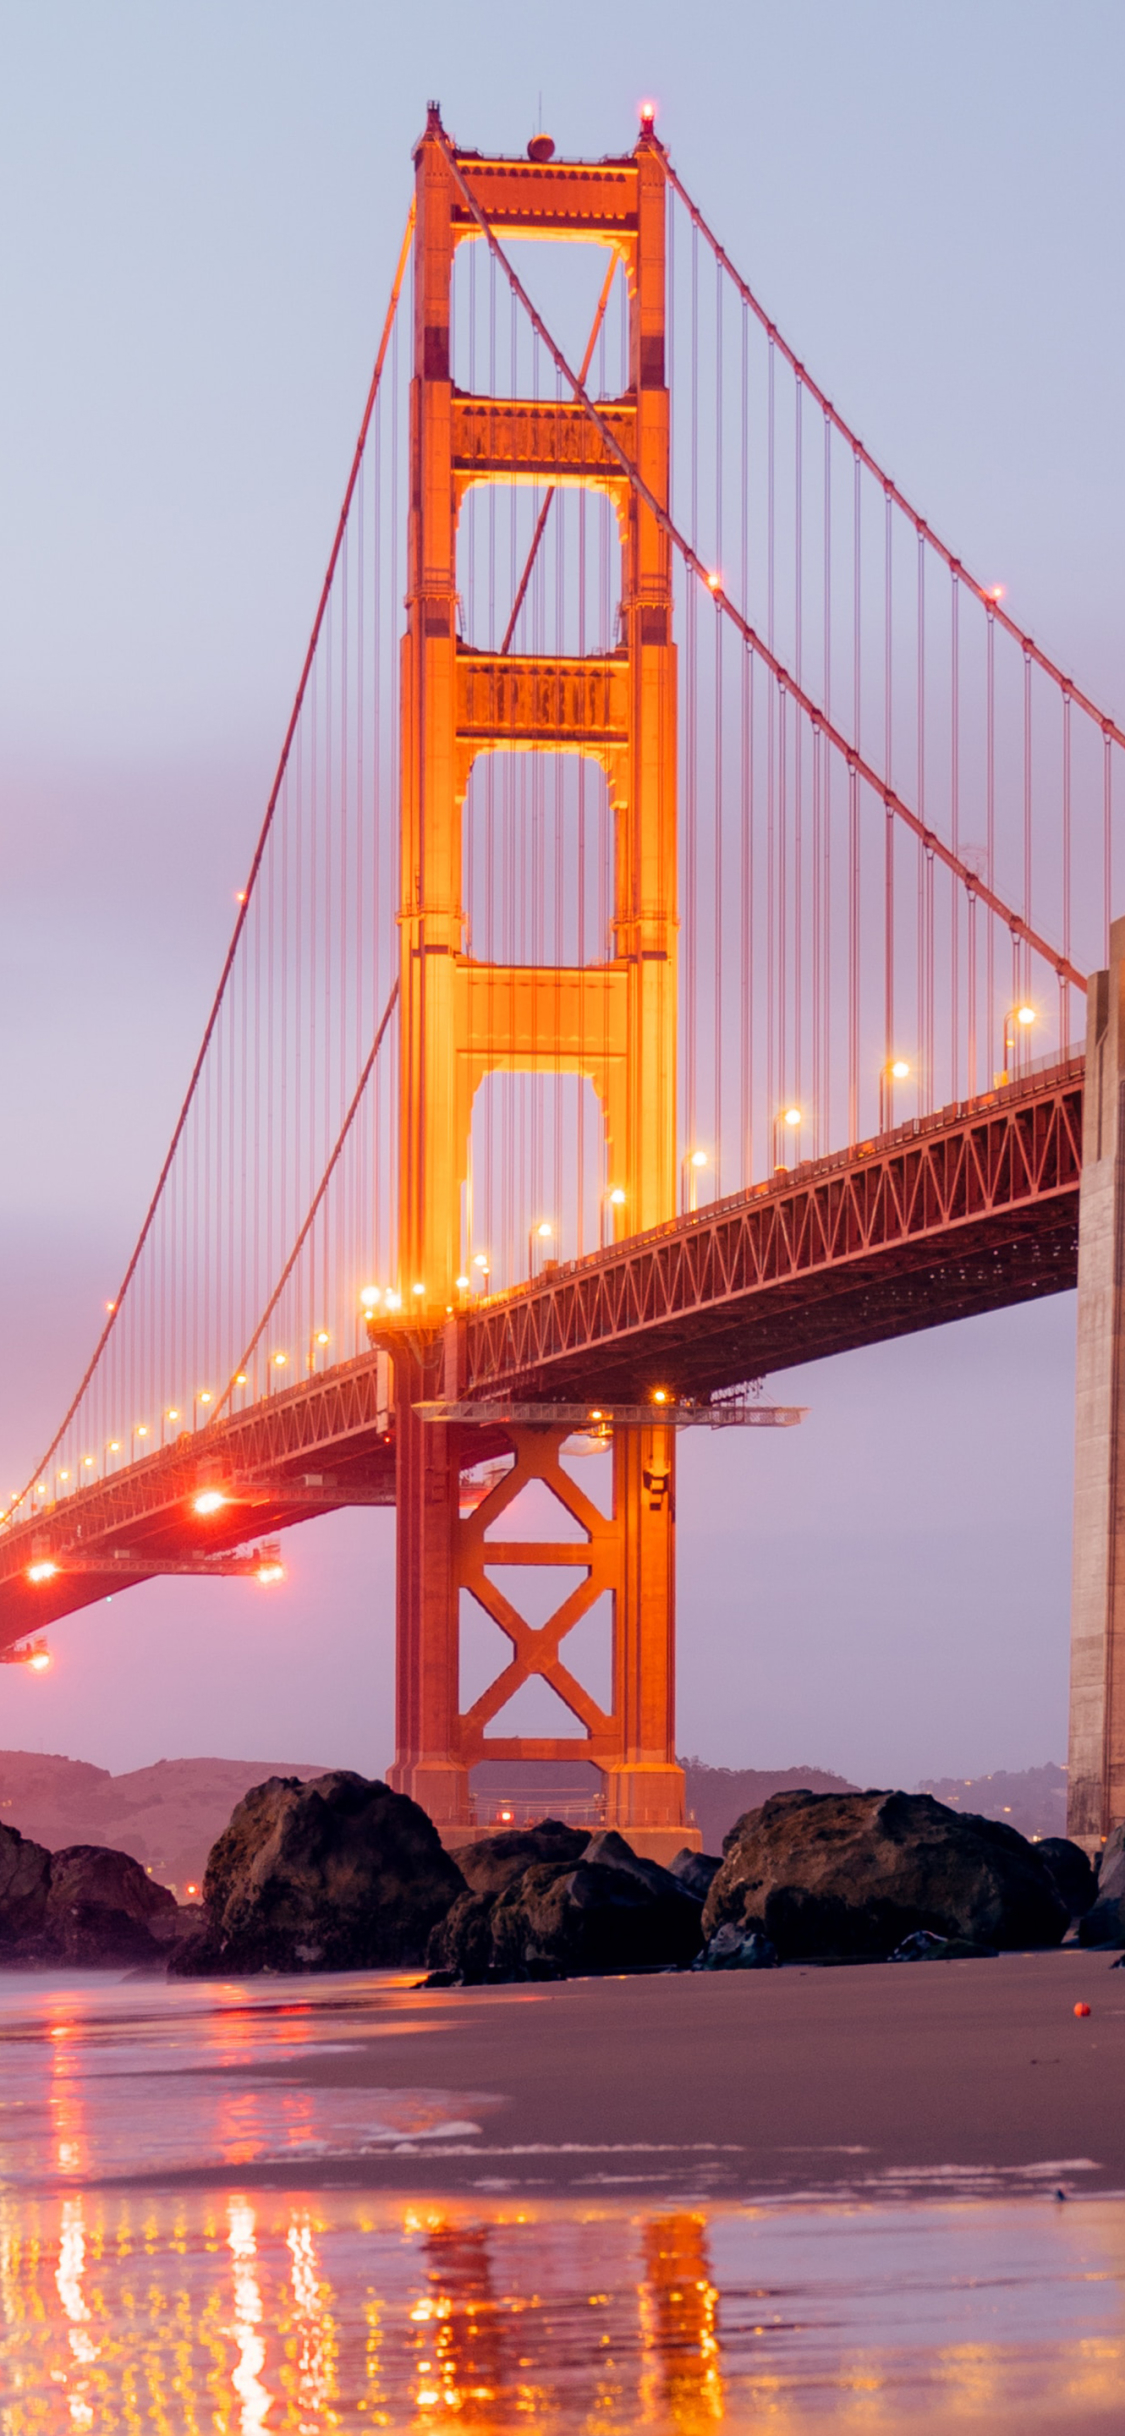 Golden Gate Bridge, San Francisco by selmshots